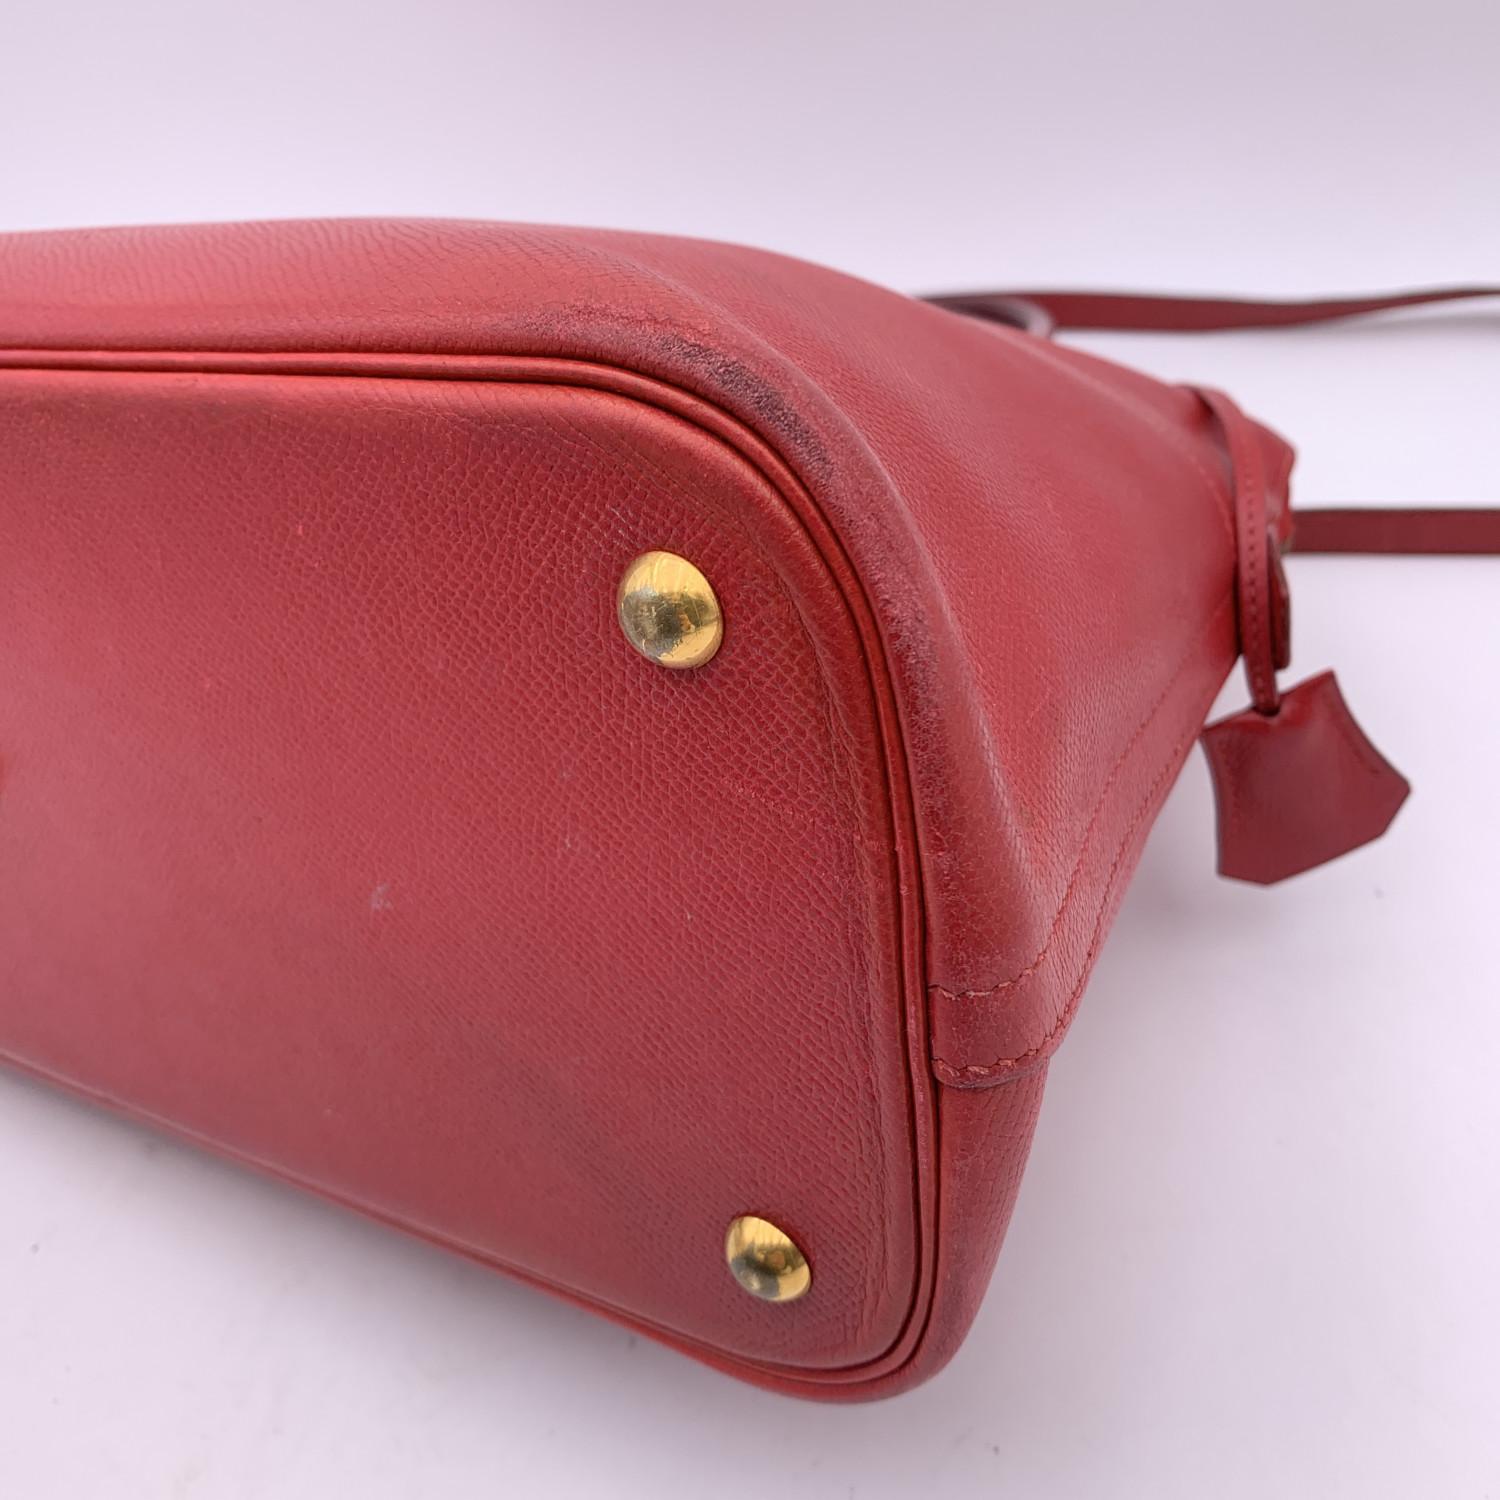 Hermes Vintage 1992 Red Leather Bolide 35 Satchel Bag with Strap For Sale 5